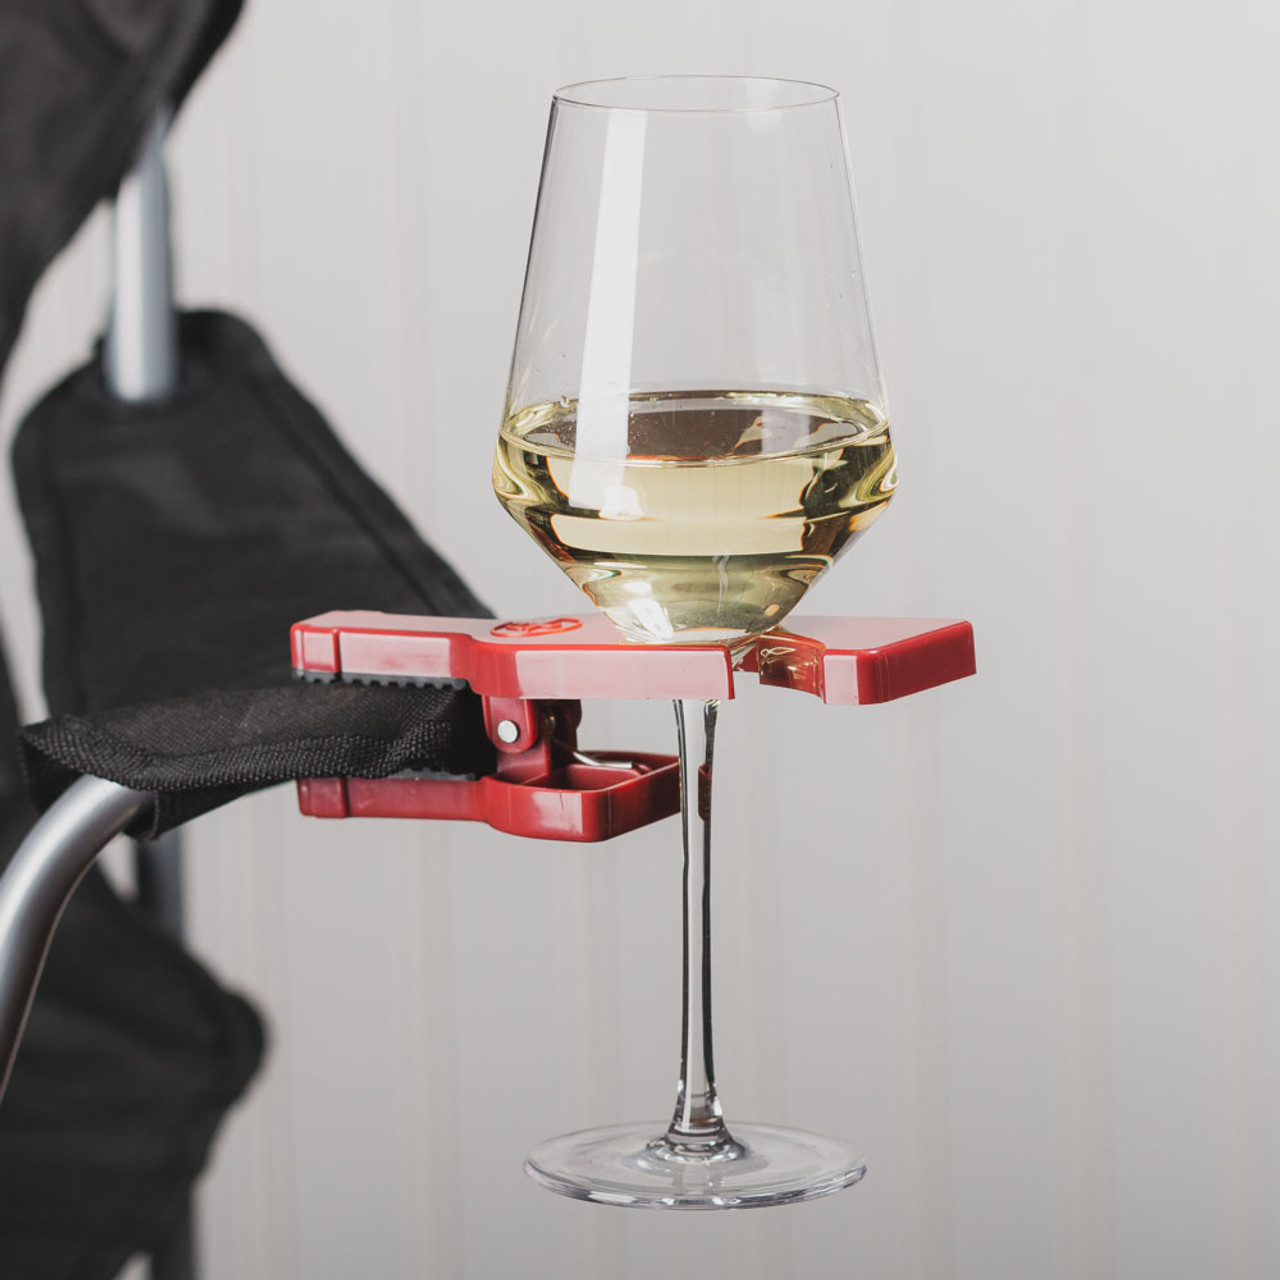 WINEGRASP Wine Glass Holder 860005480715